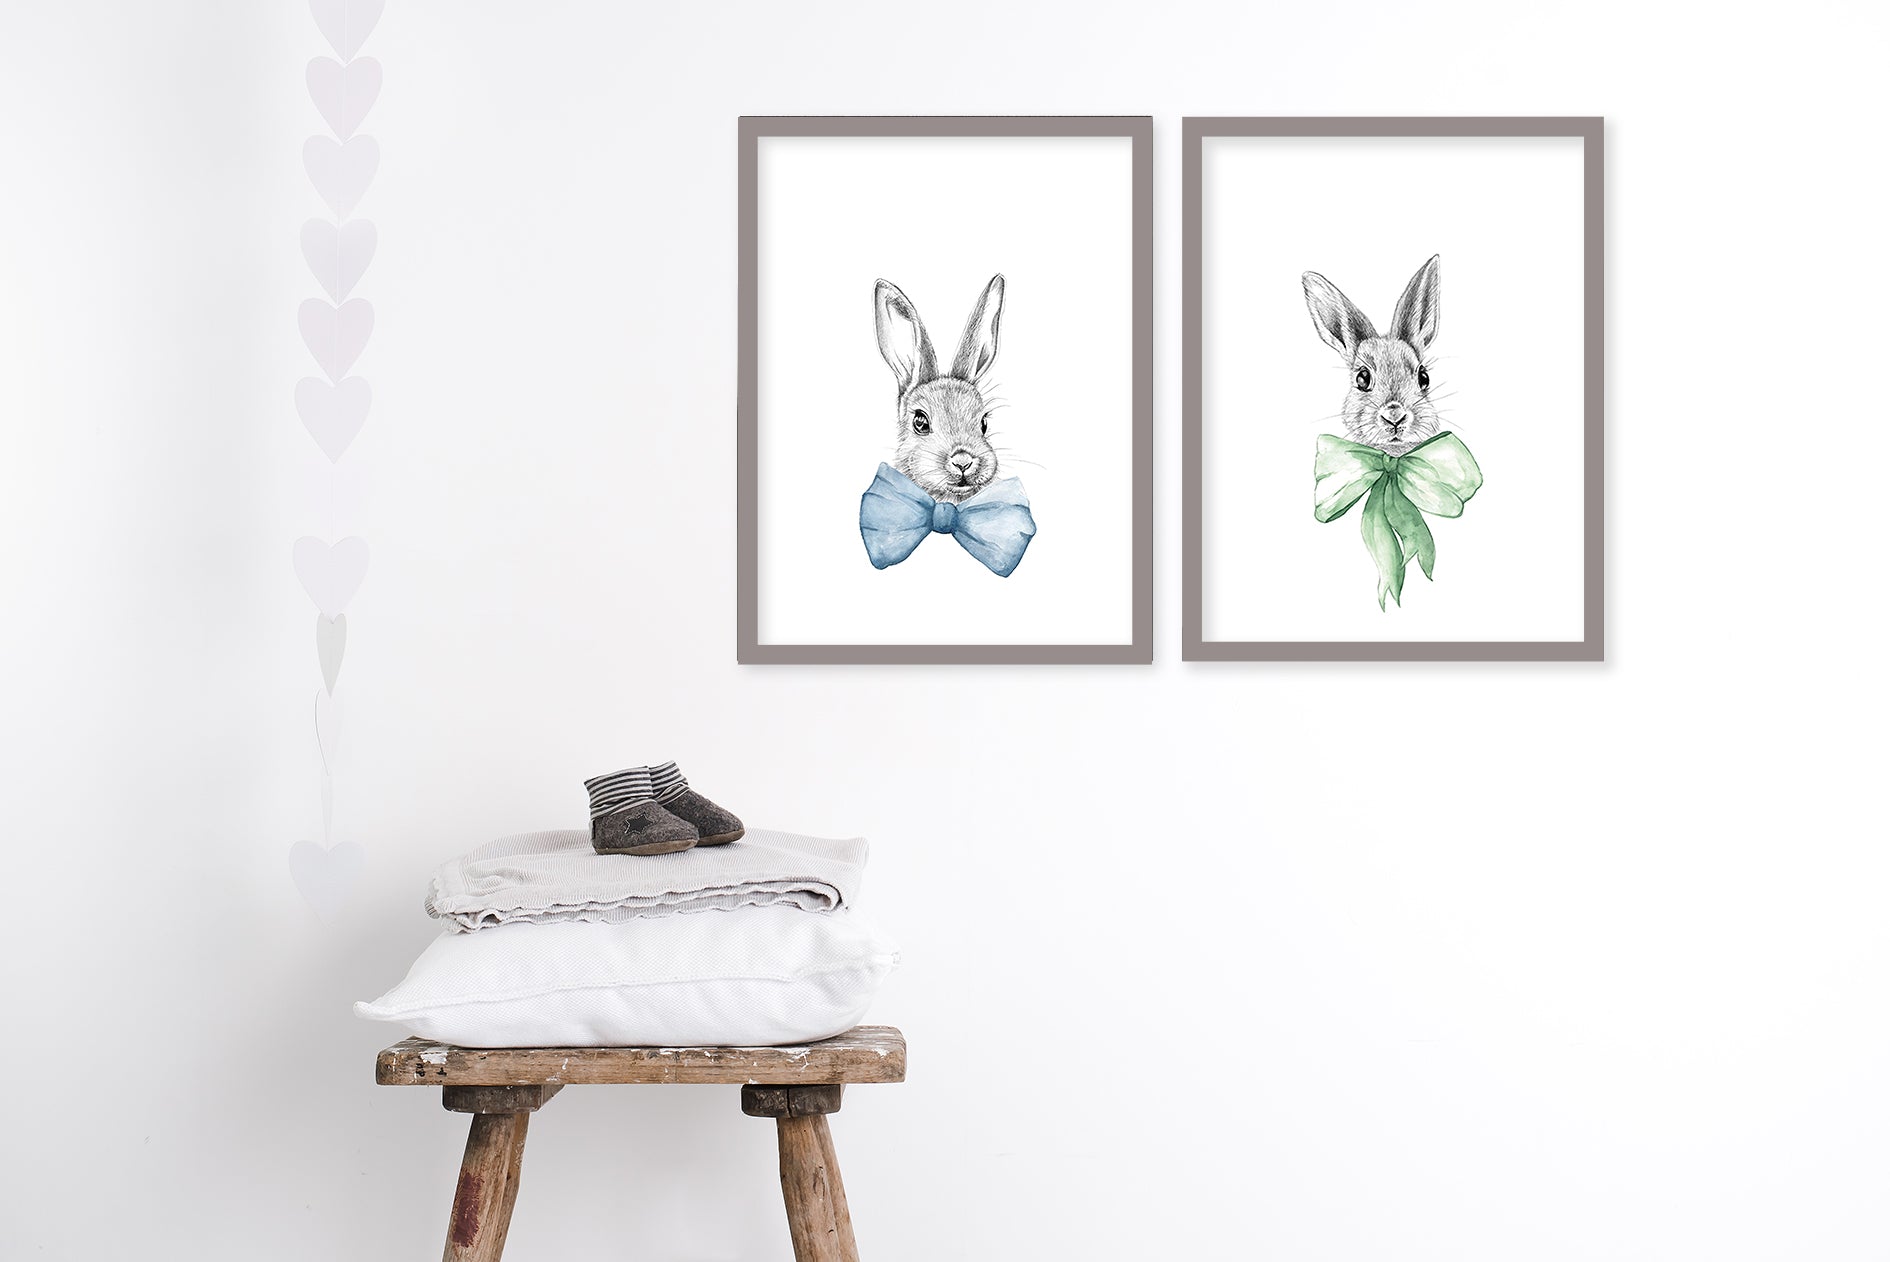 Bunnies in bows art prints for nursery or kids room